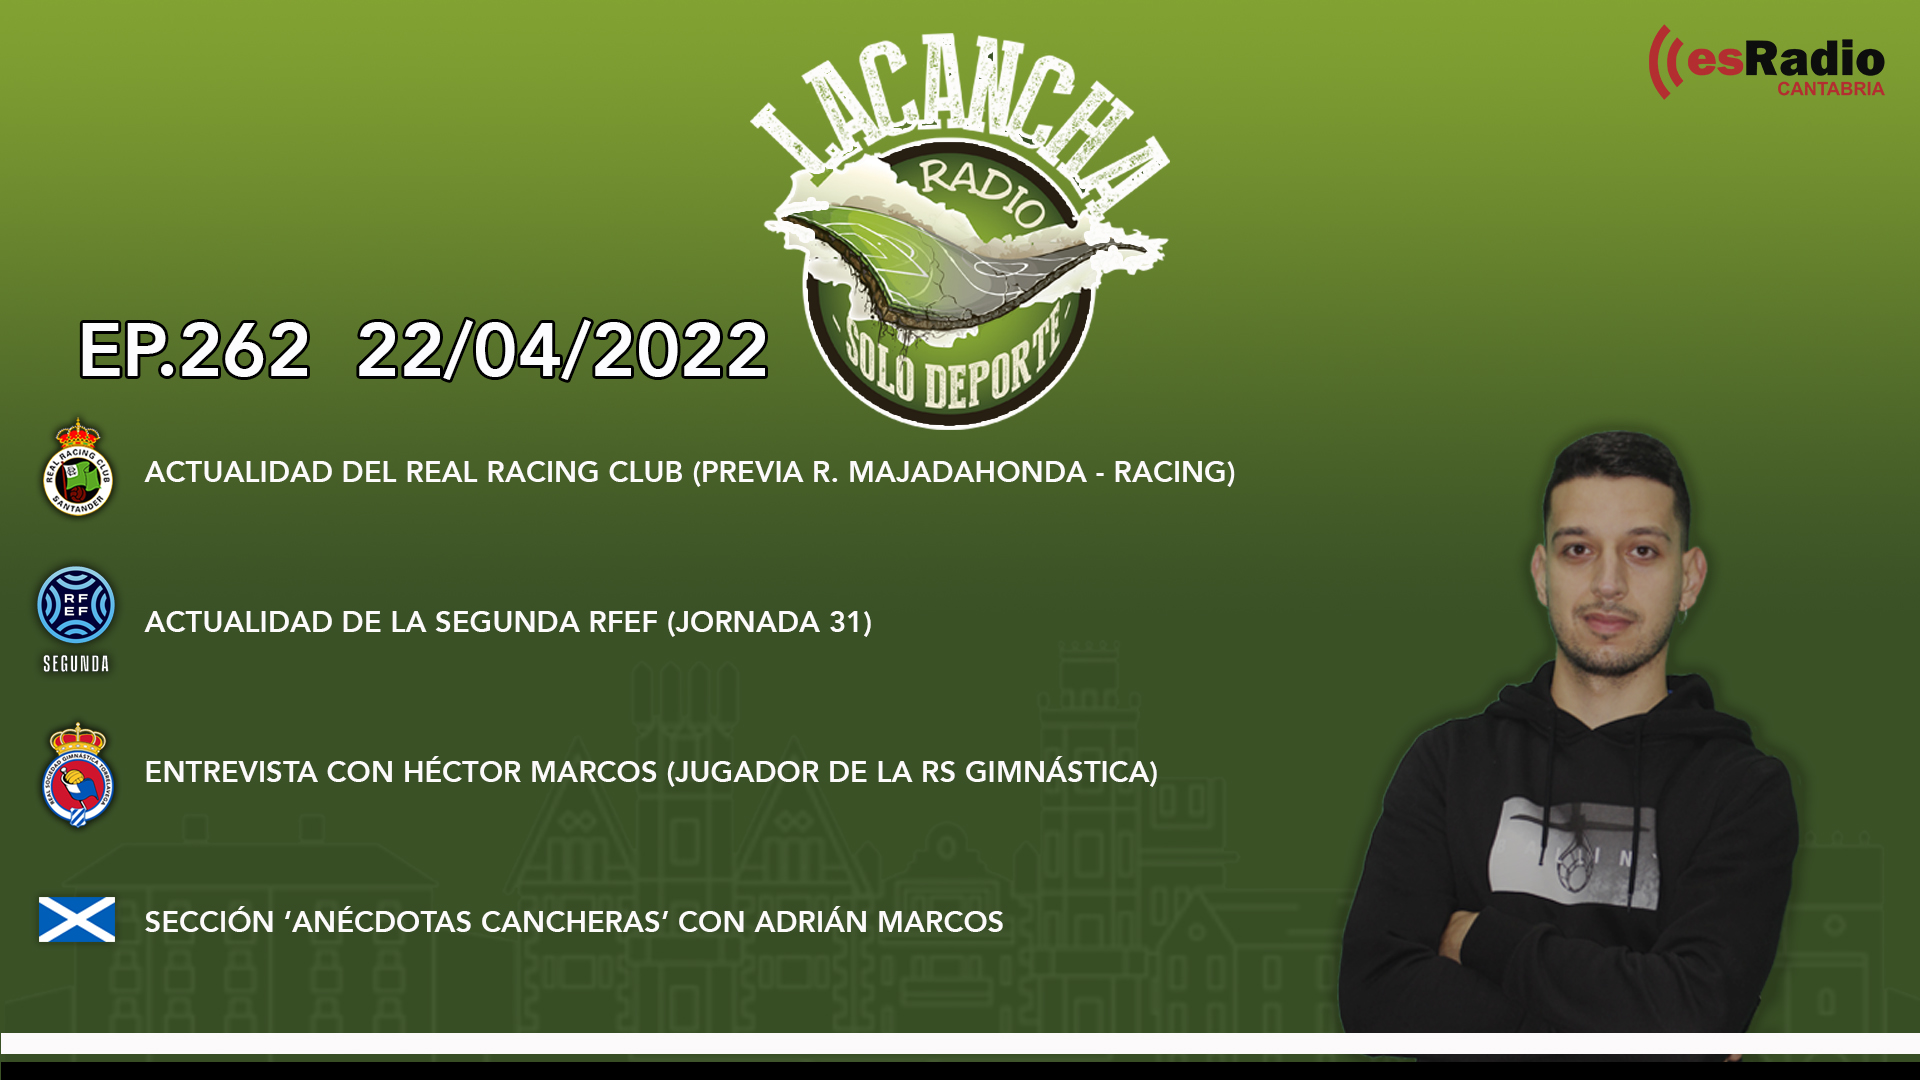 La Cancha Ep. 262 (22/04/2022)